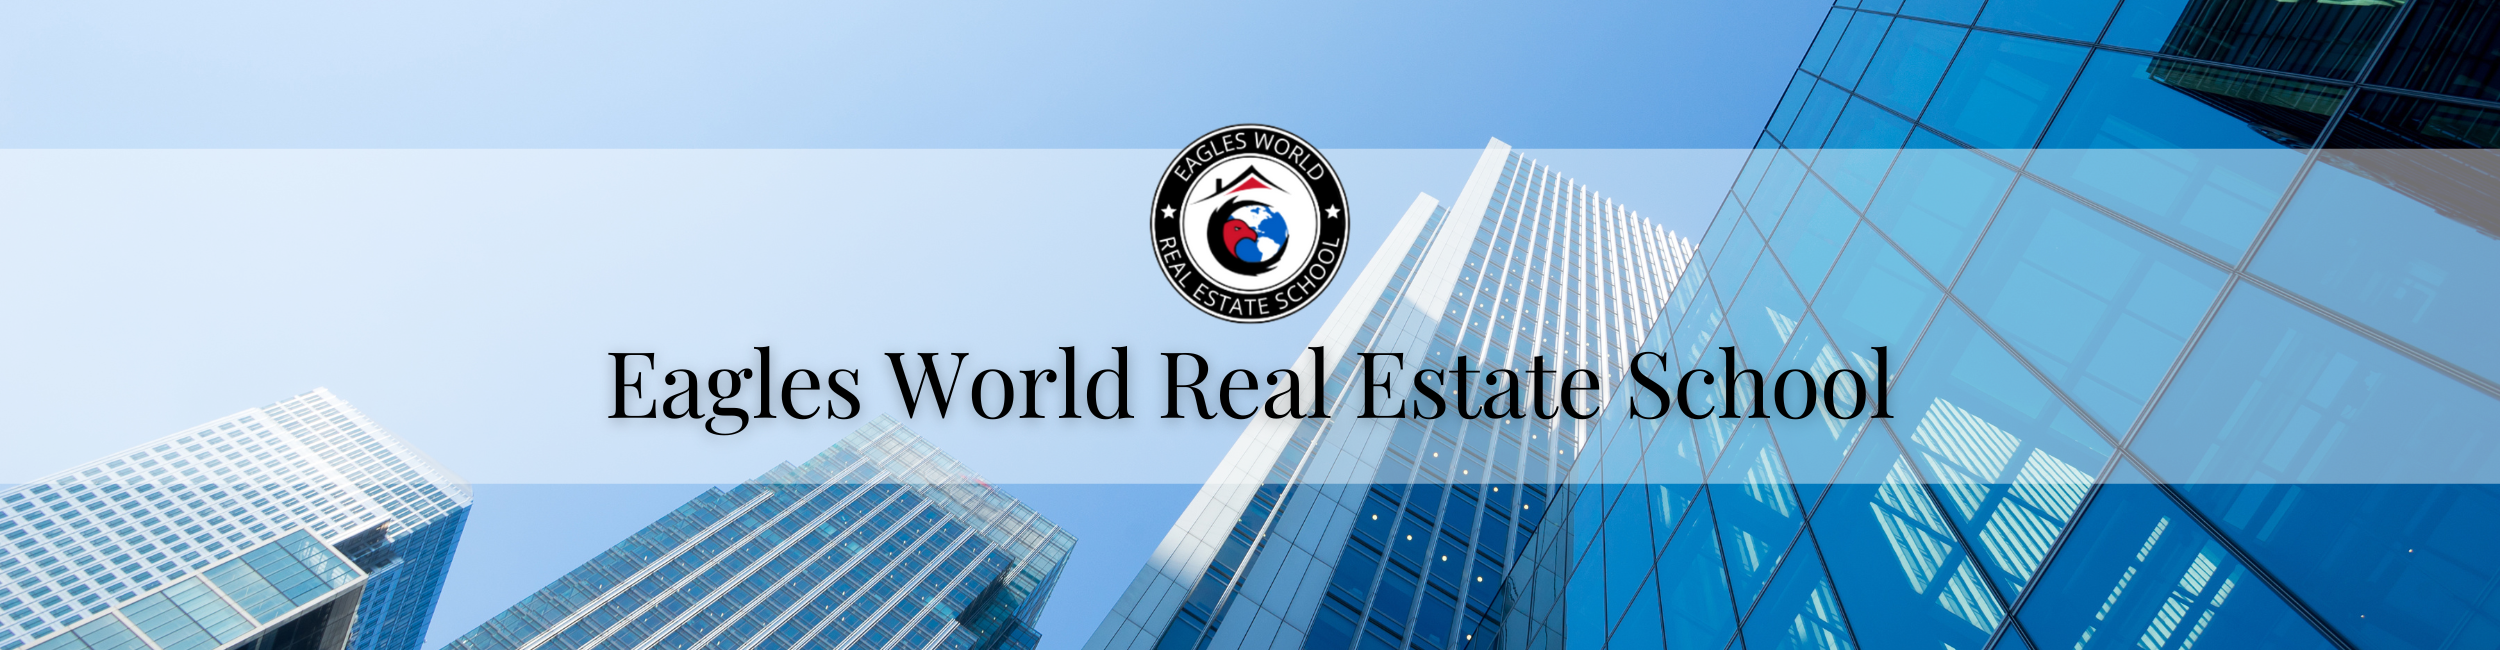 Eagles World Realty Referral Company (10)